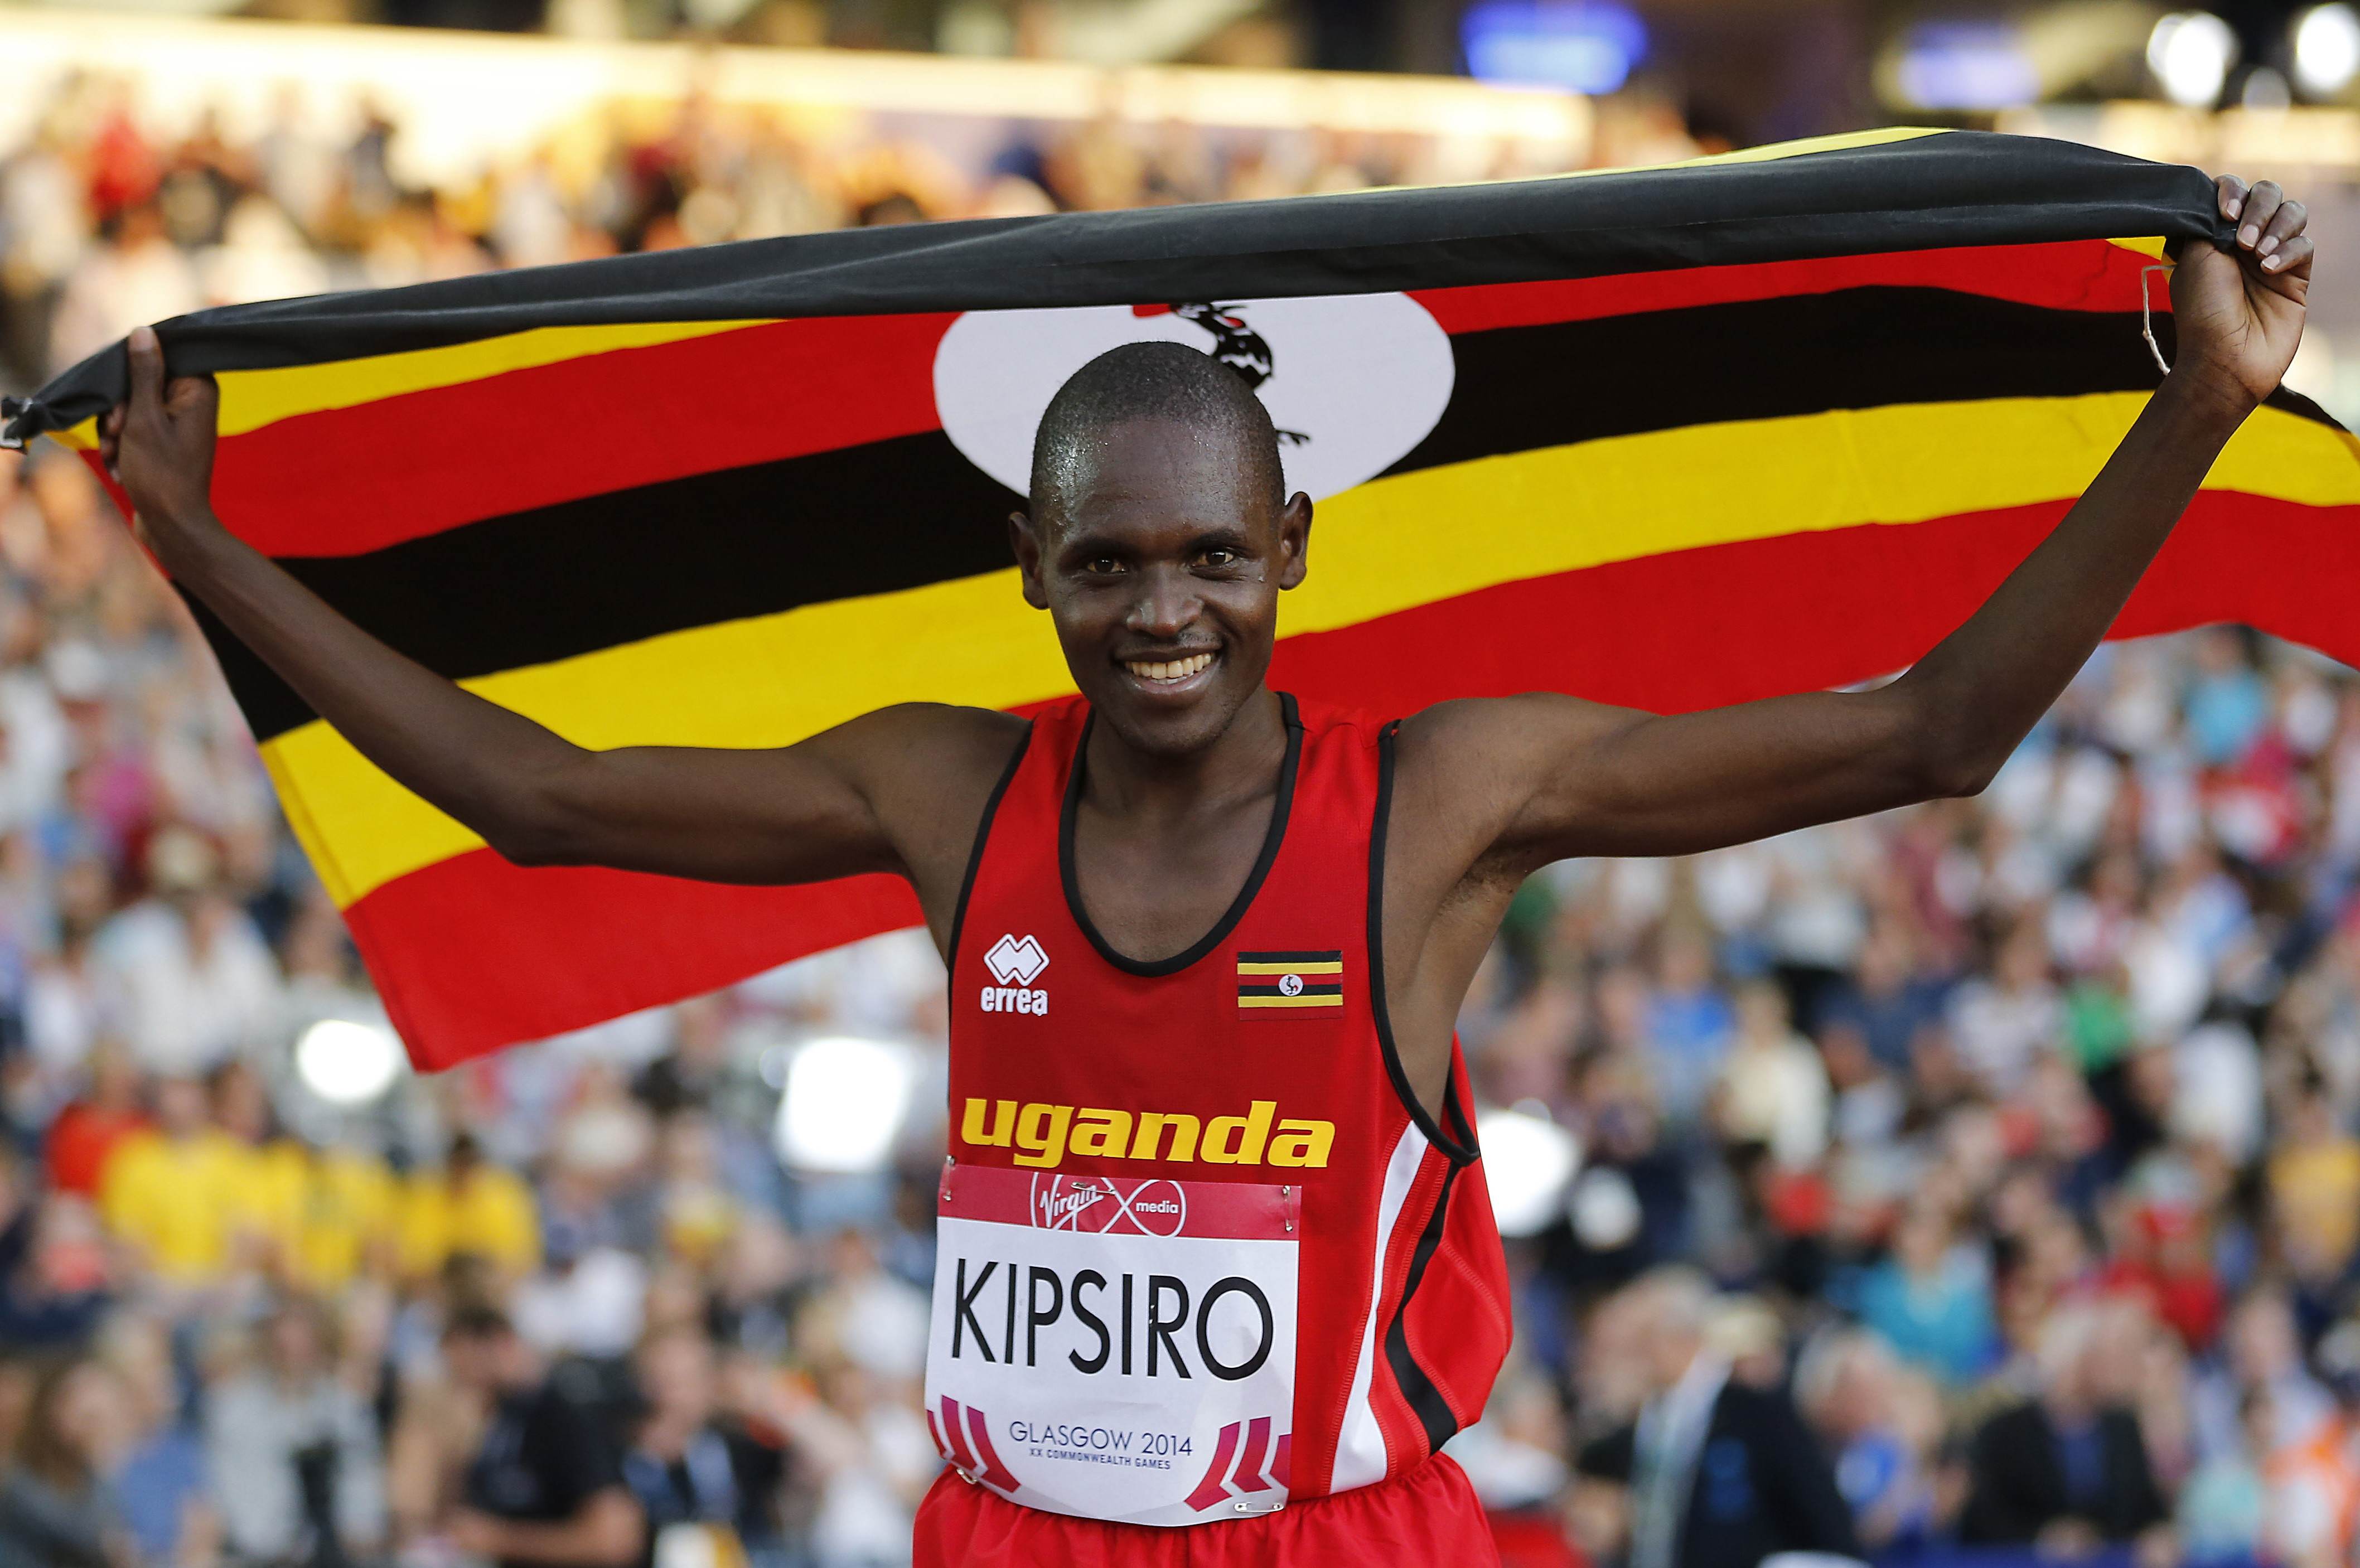 Uganda's Moses Kipsiro going after third consecutive Gold in Gold Coast